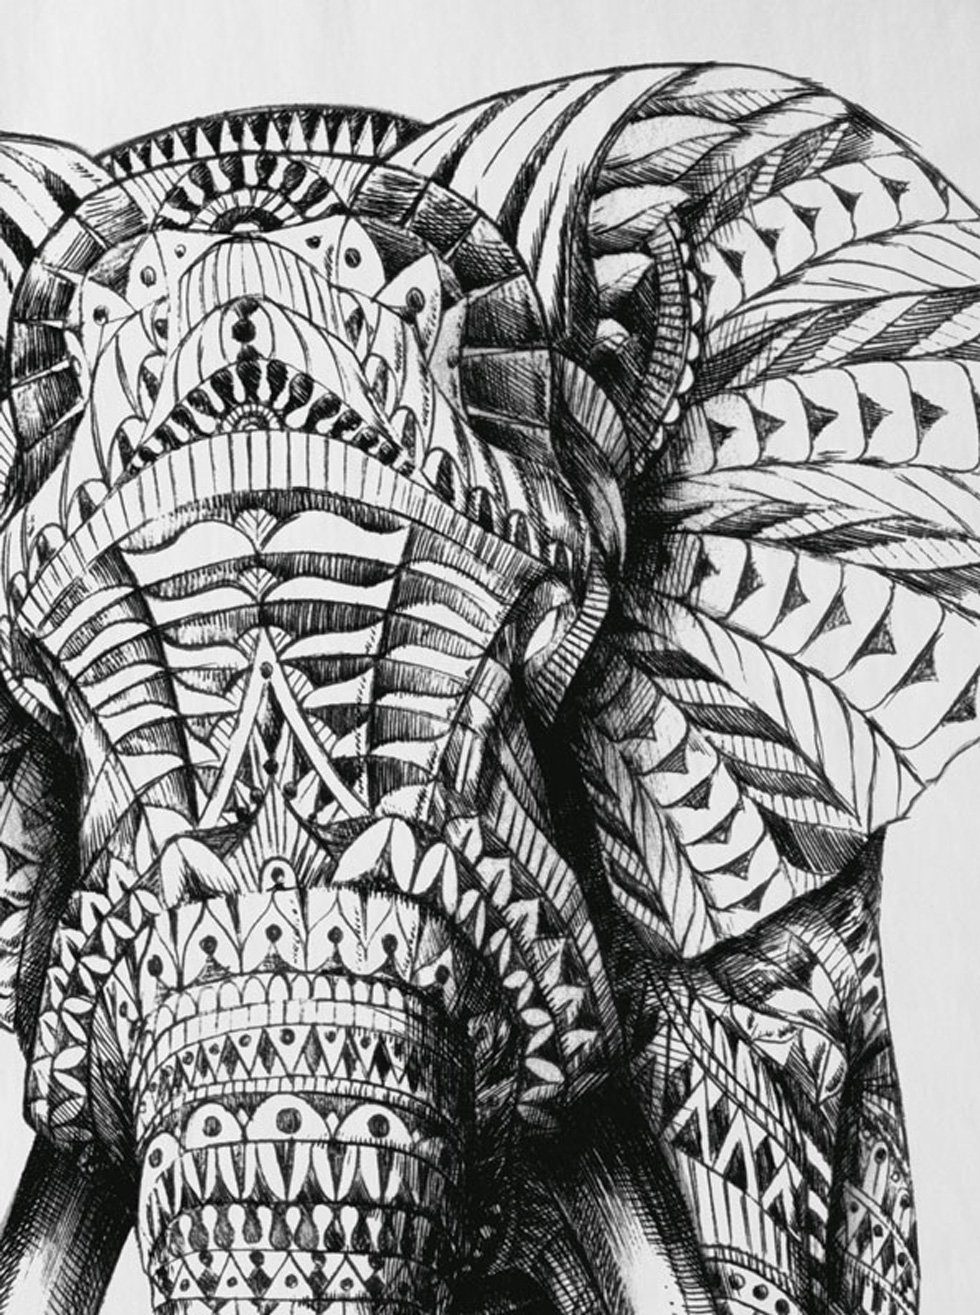 Herren weiß Ink urlaub style3 elephant T-Shirt Elefant zoo Print-Shirt